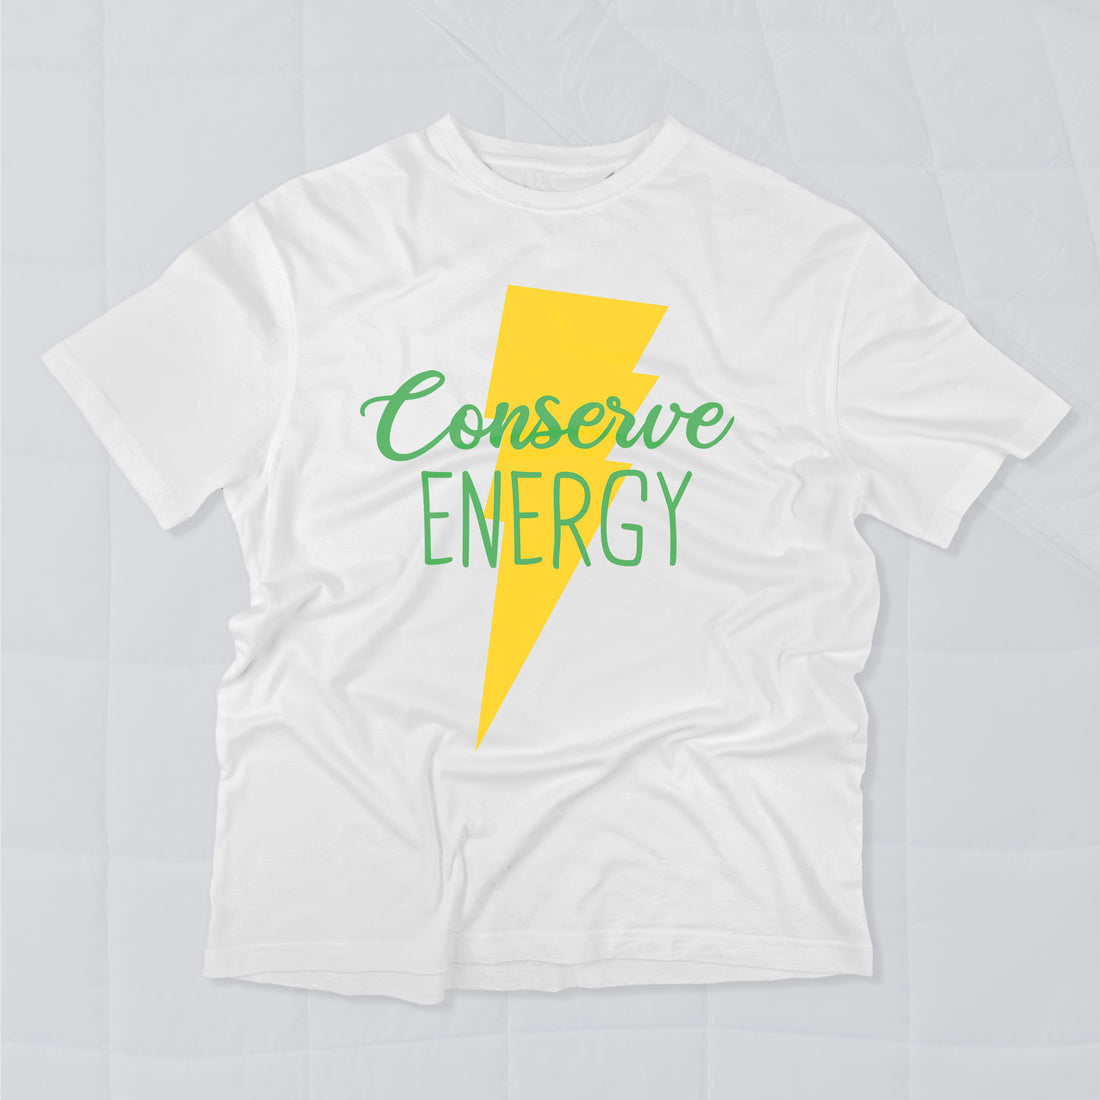 Conserver Energy